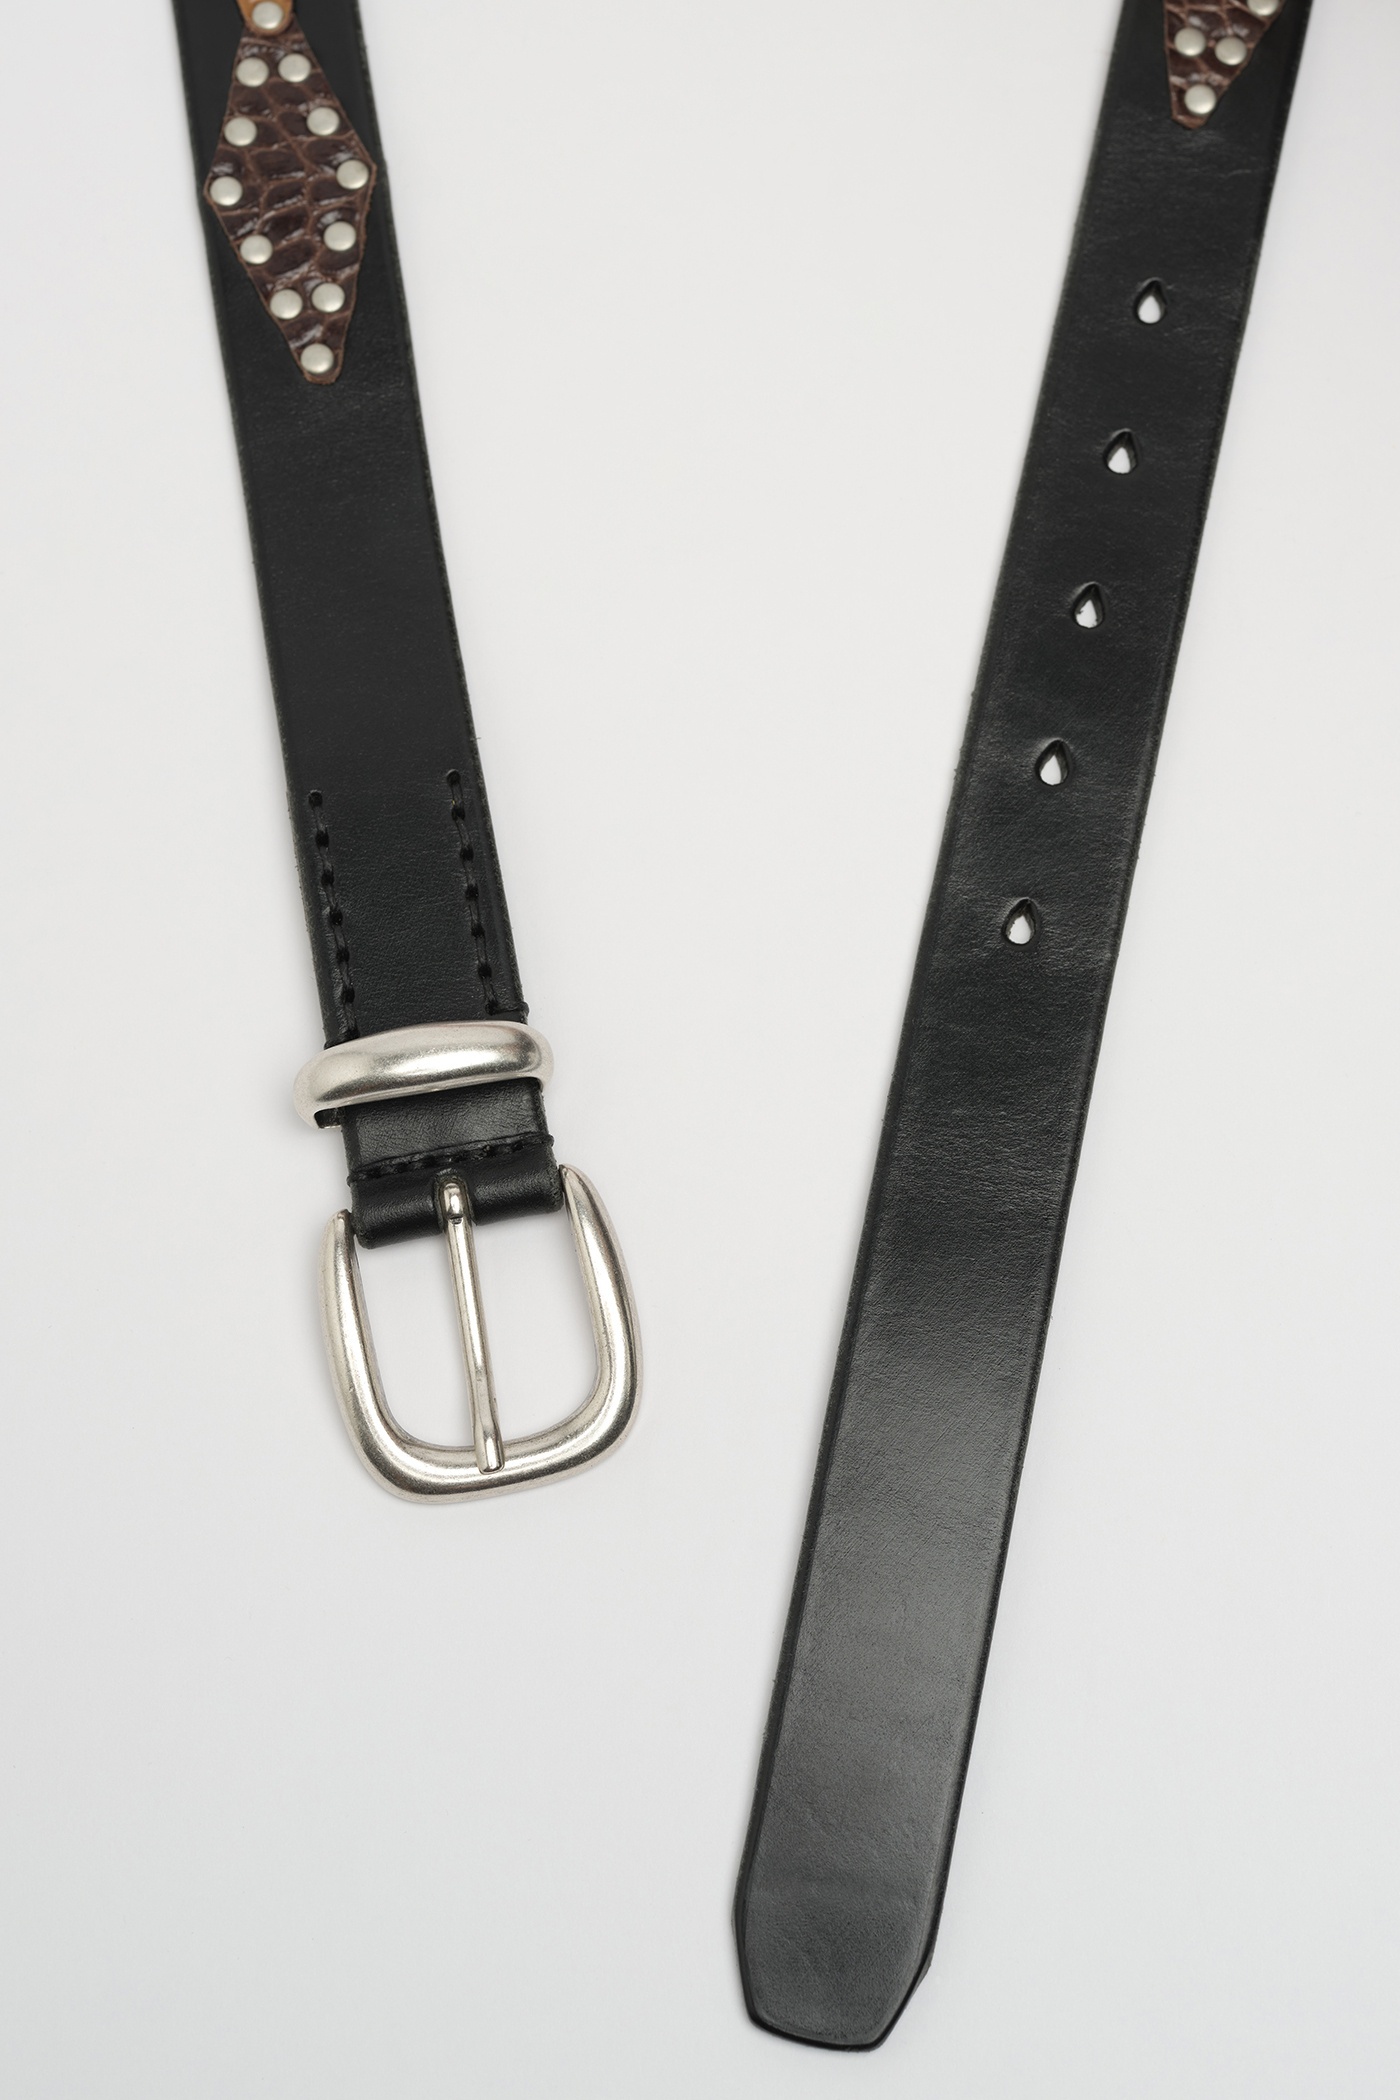 3 CM Patched Belt Black Bridle Leather - 3